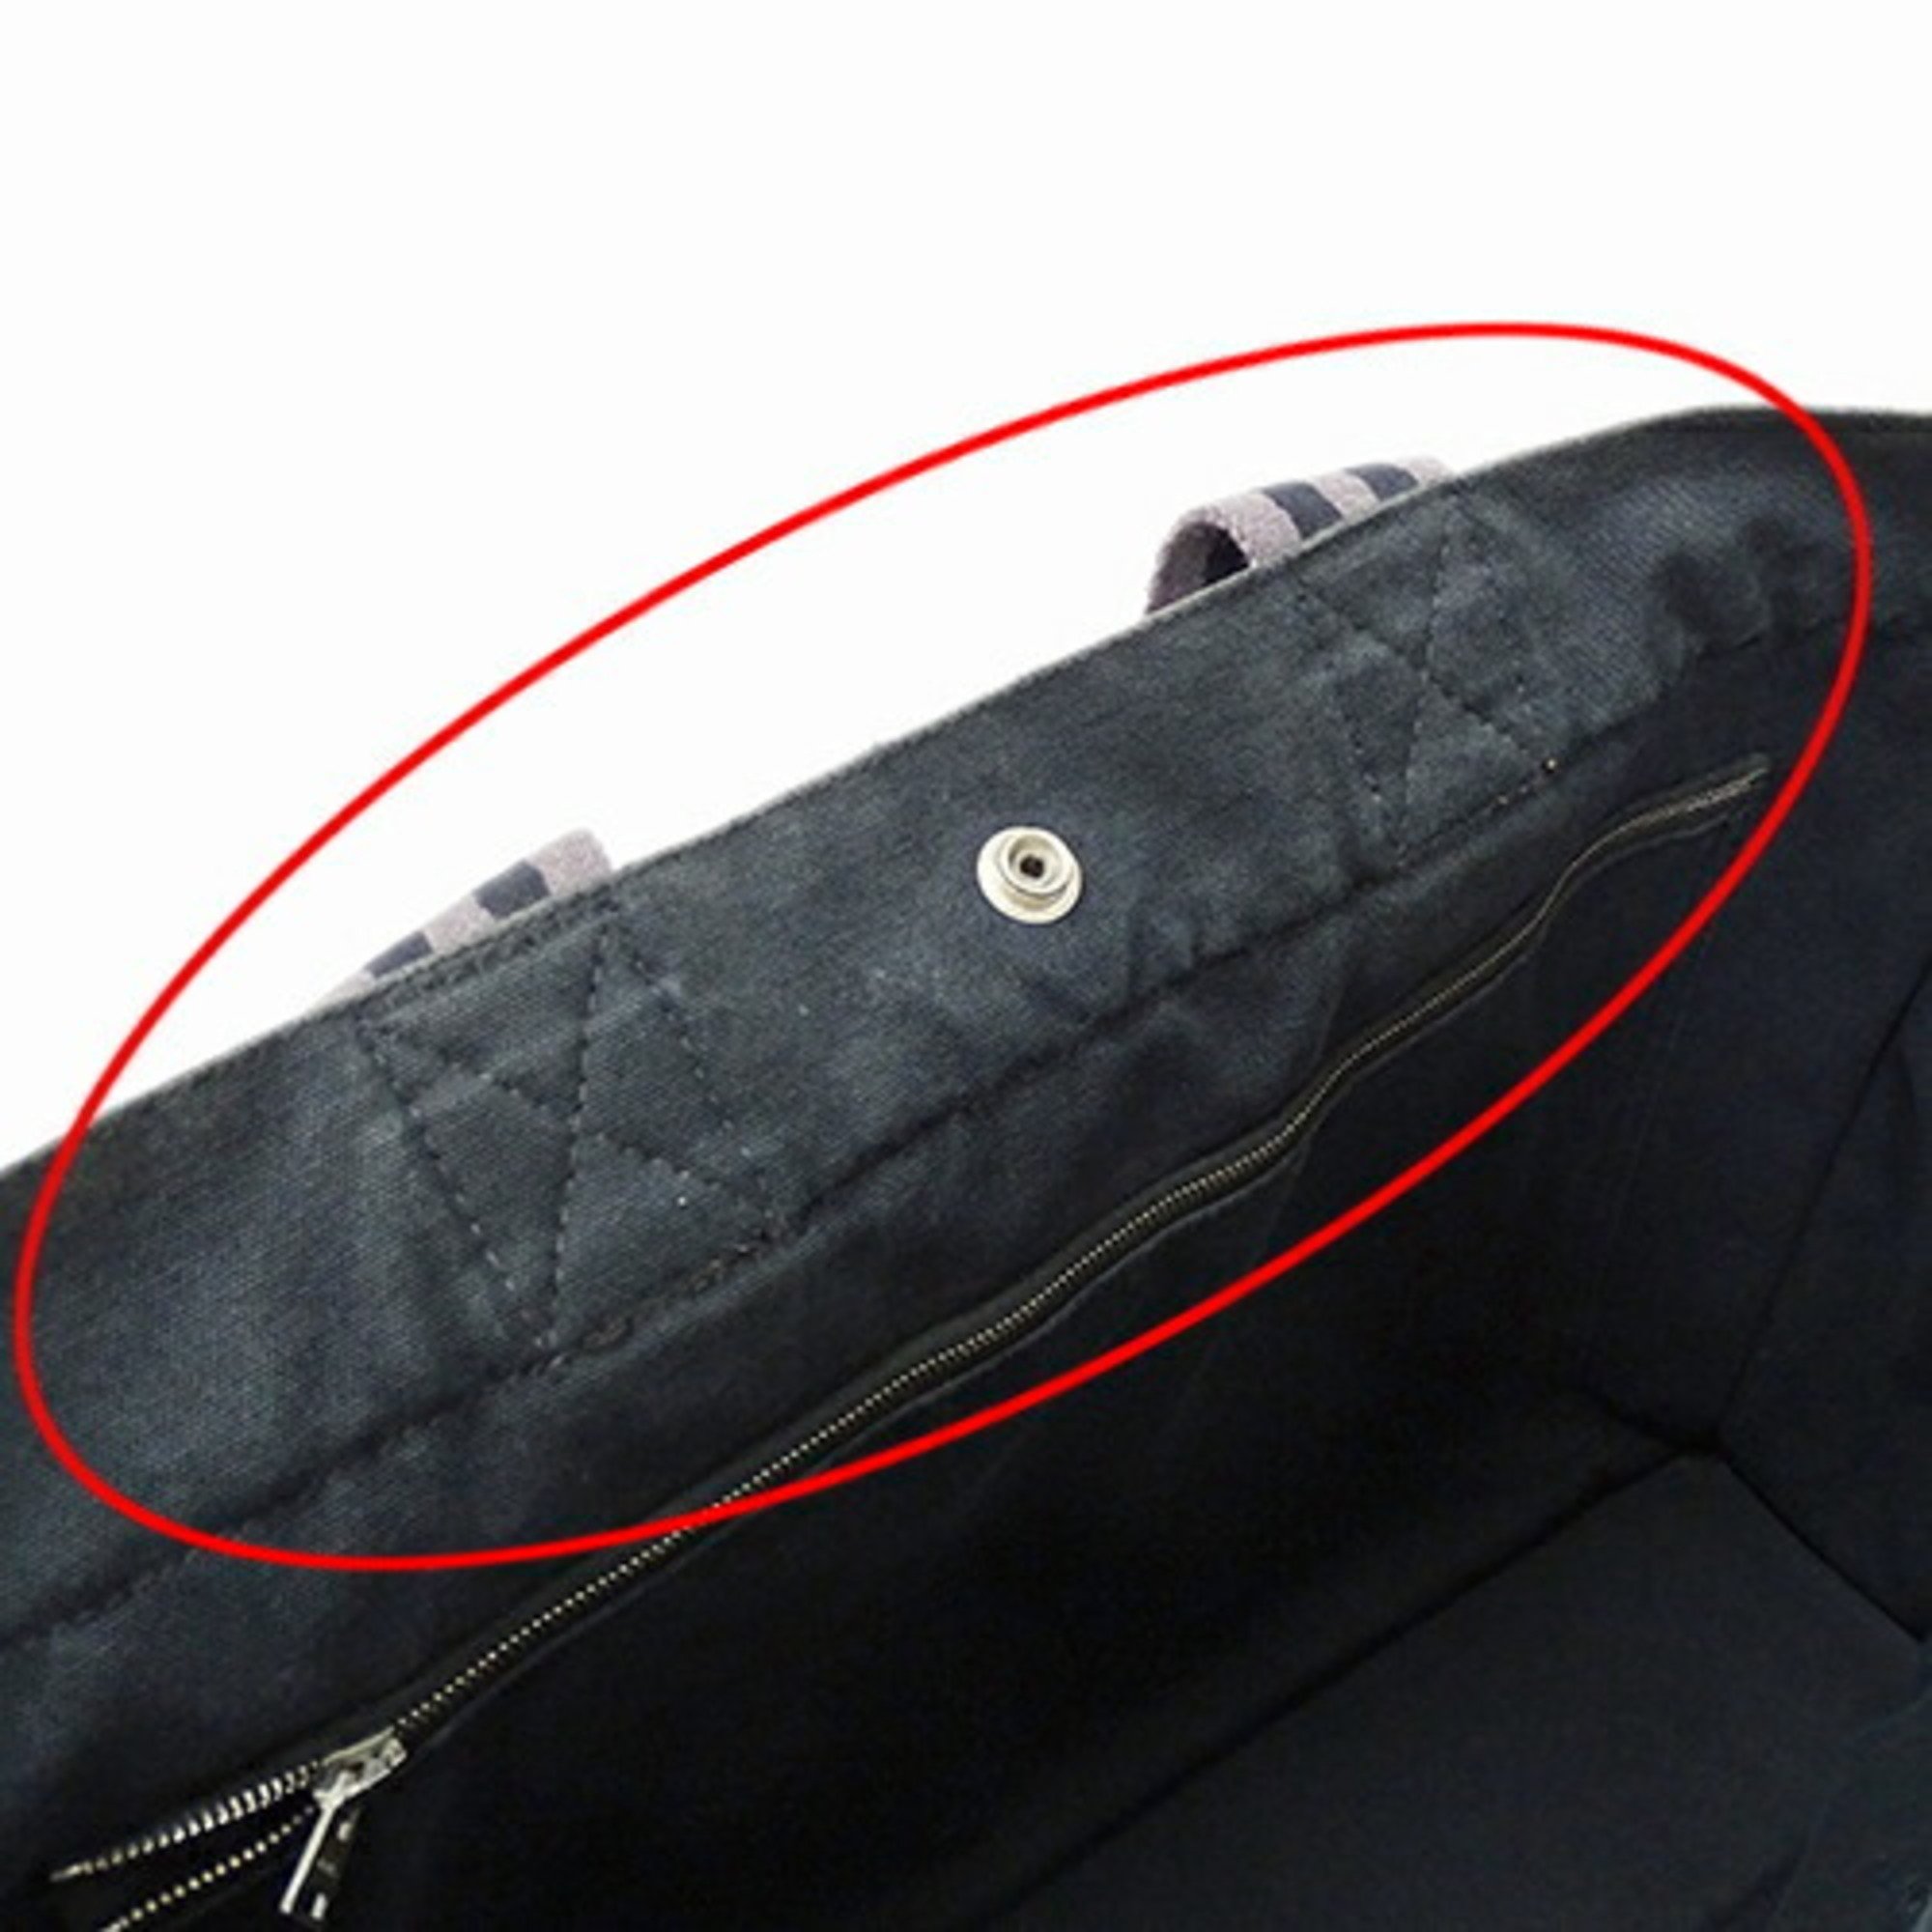 HERMES Bag Ladies Men's Tote Handbag Fool Toe MM Canvas Black Gray